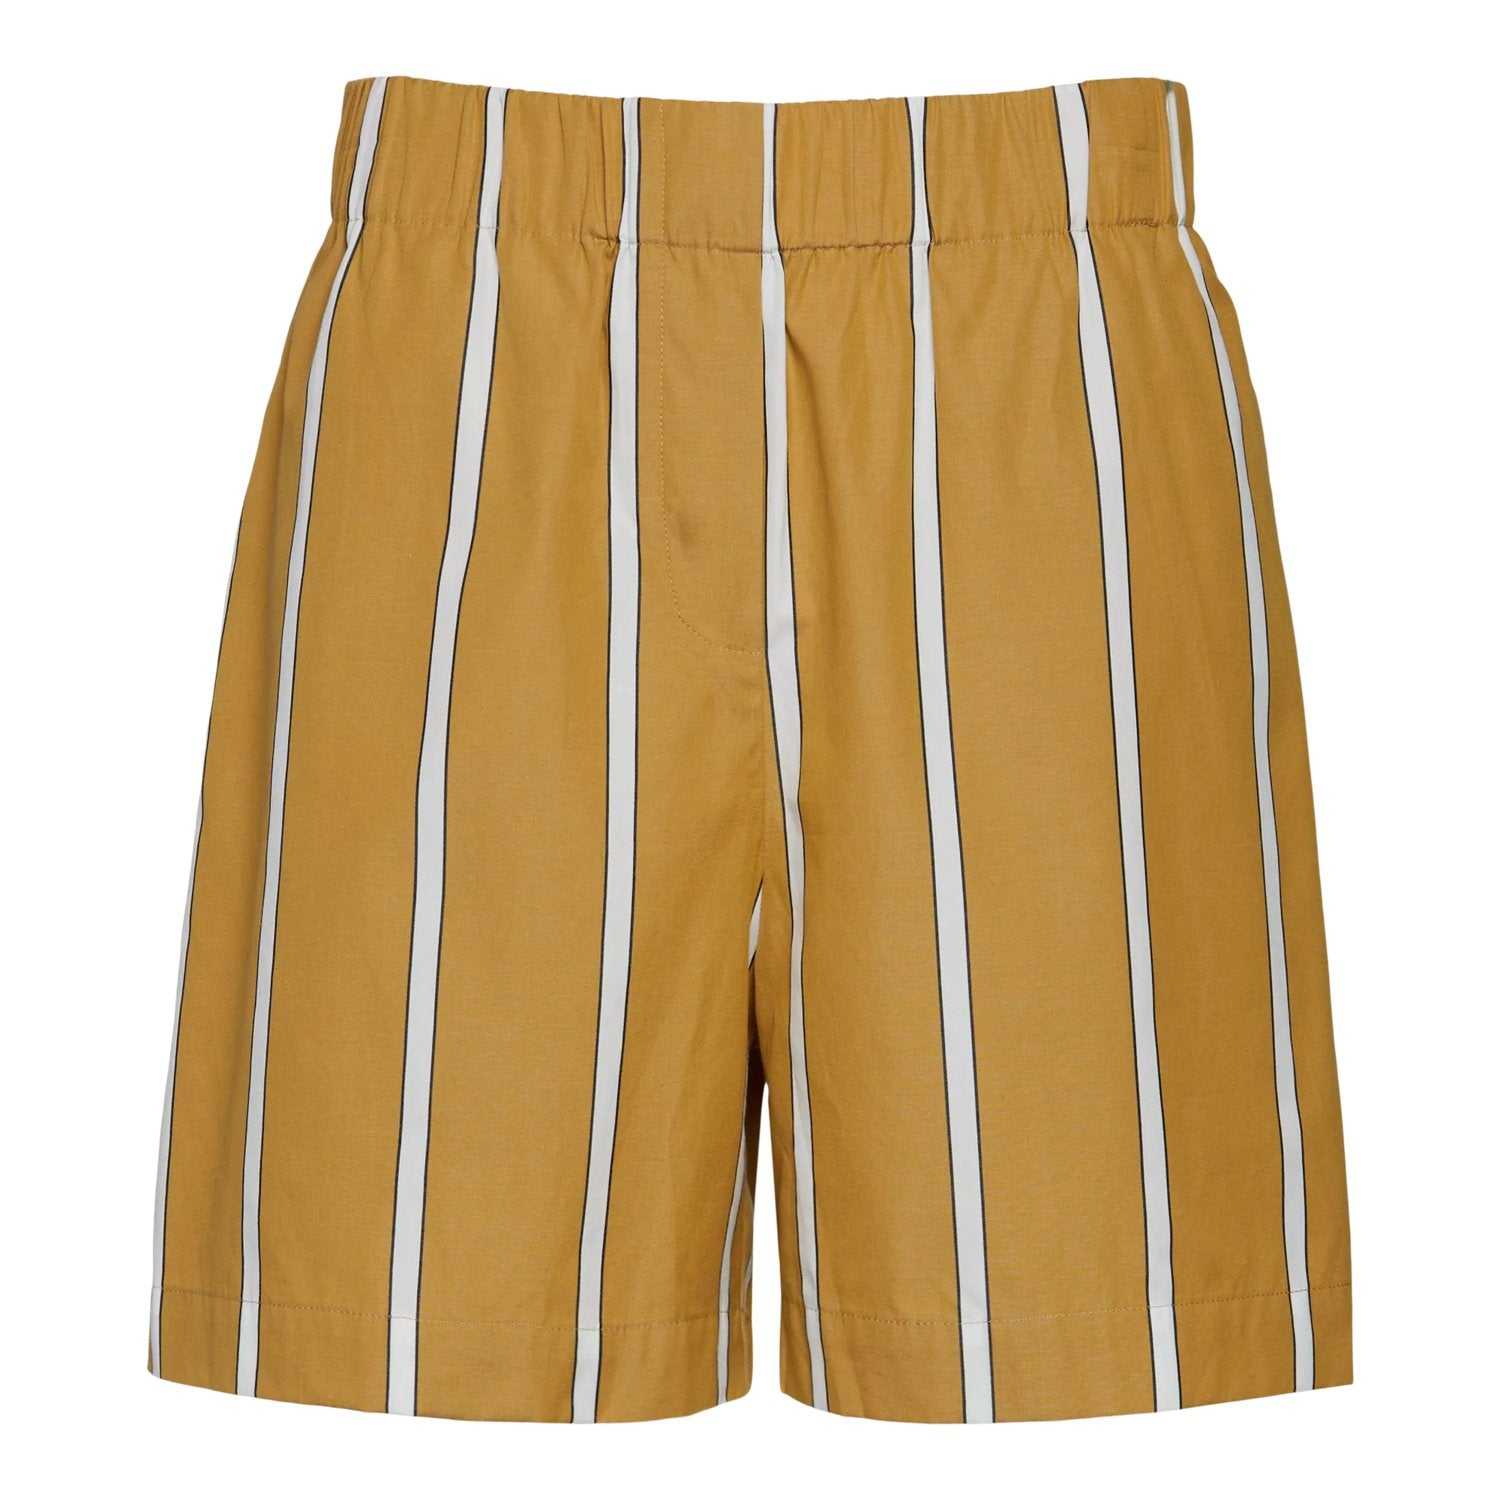 Cotton Striped Elastic Shorts